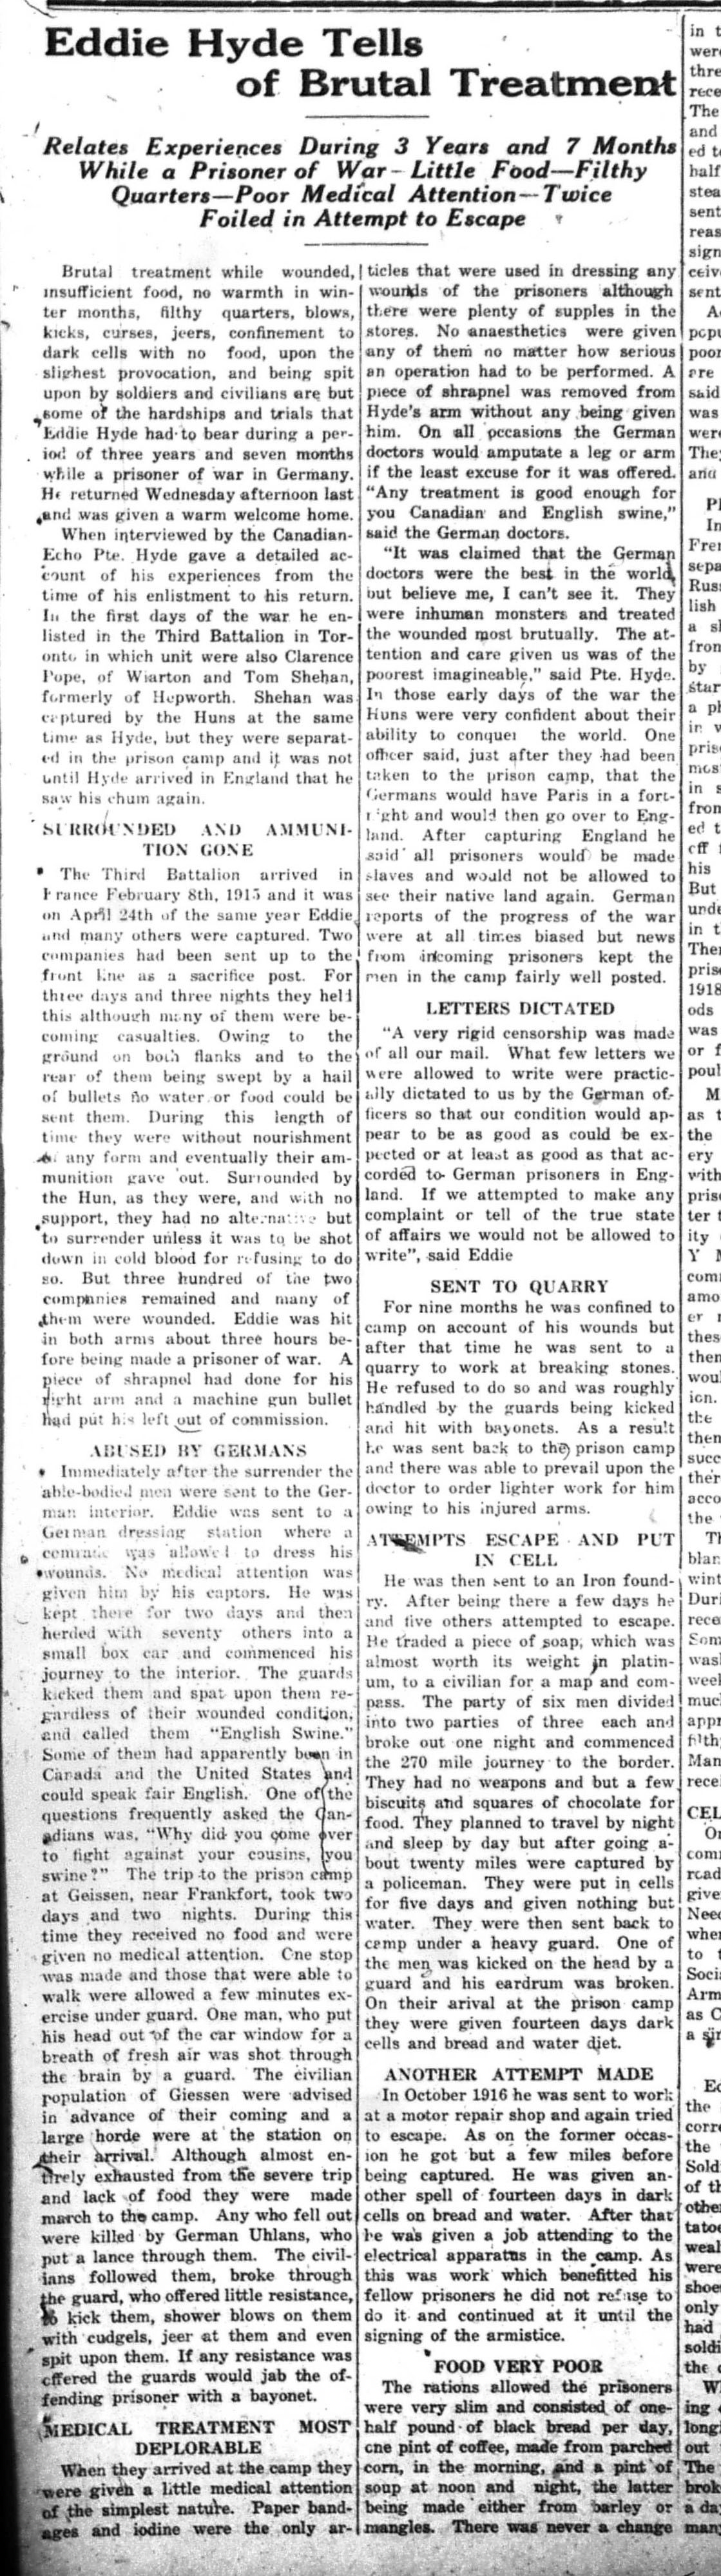 Canadian Echo Wiarton, March 19, 1919 (part 1)